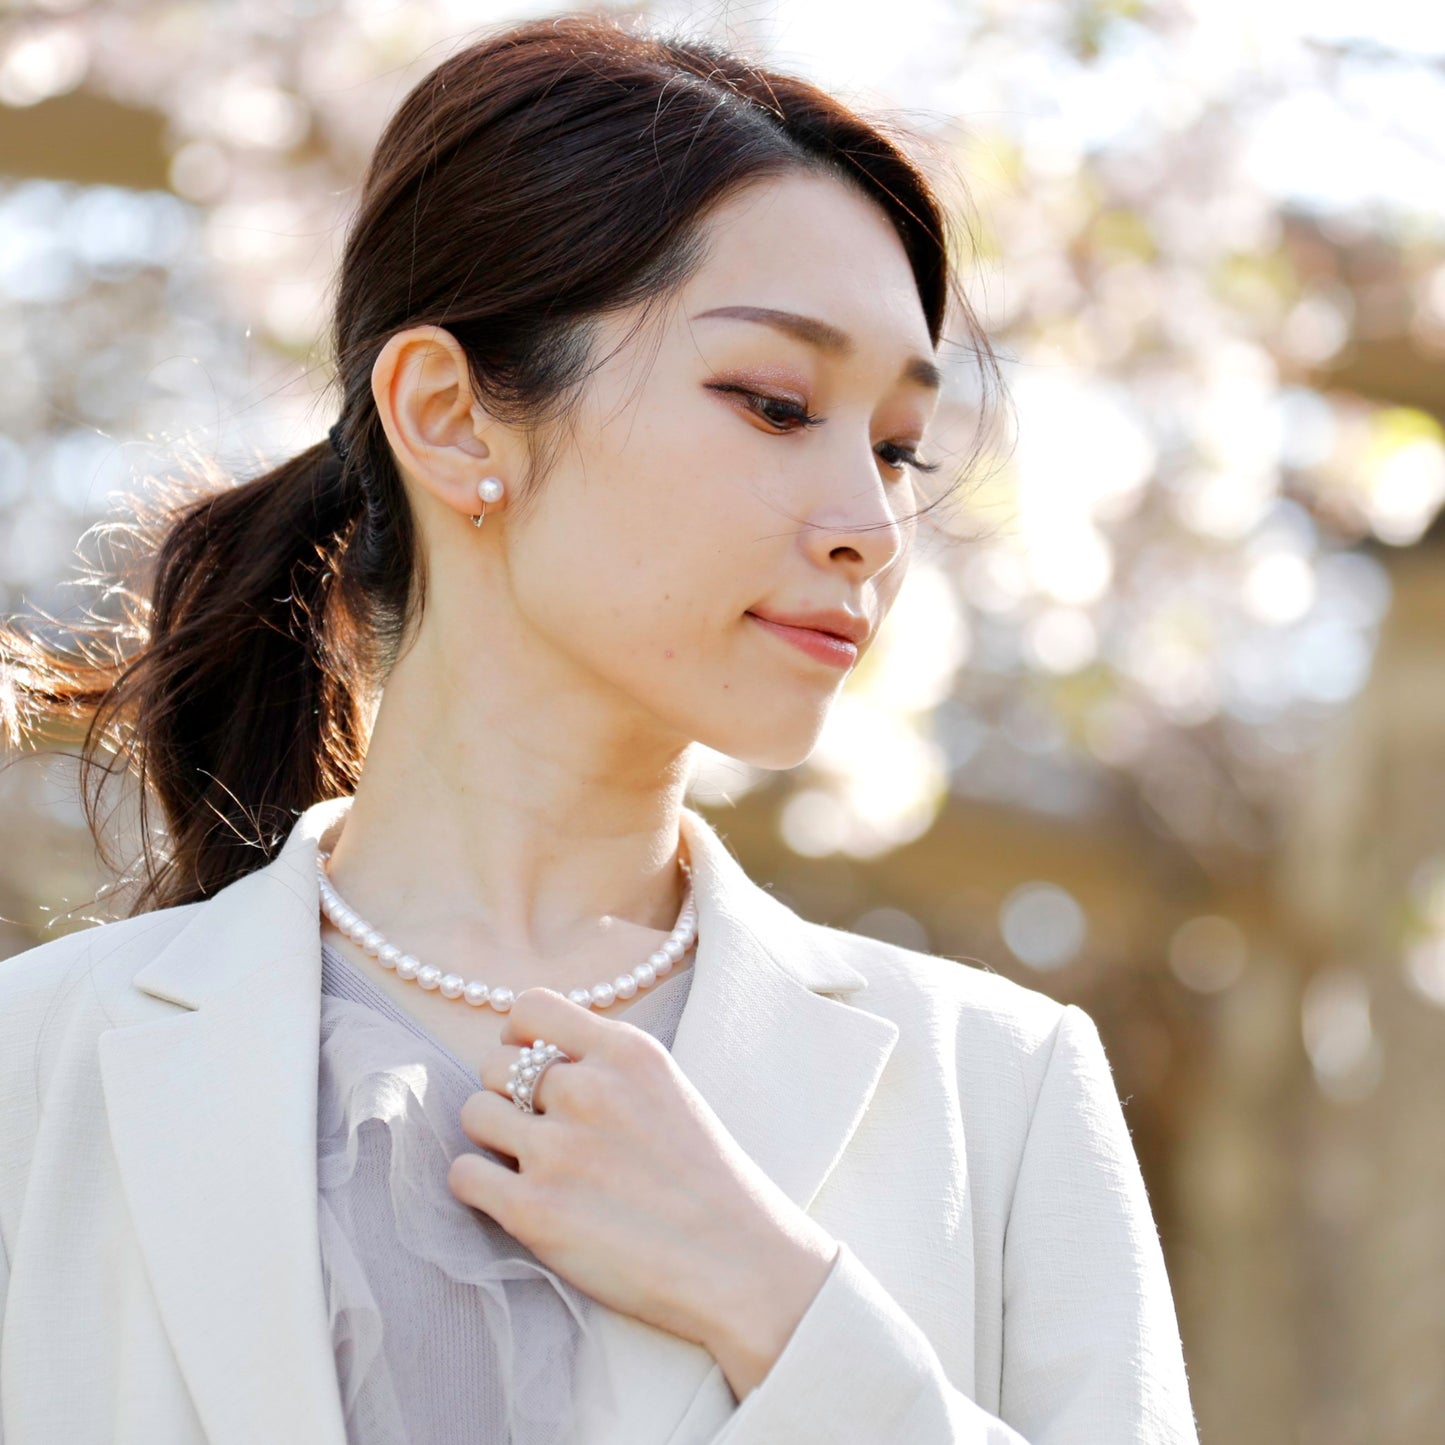 Hanadama Akoya Pearl earrings